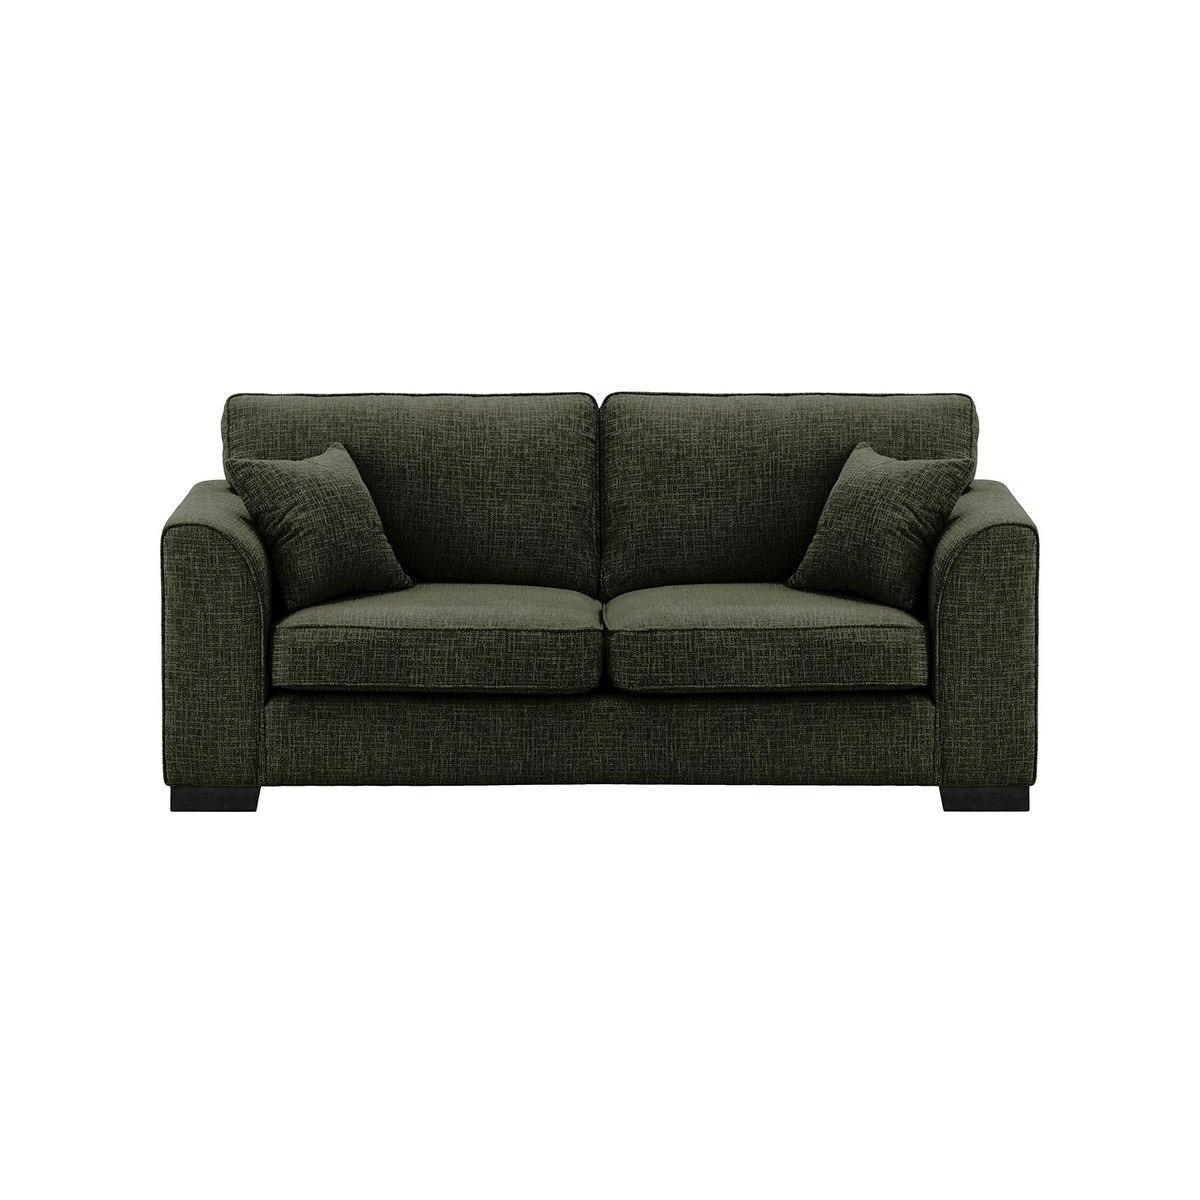 Avos 3 Seater Sofa, lilac, Leg colour: dark oak - image 1